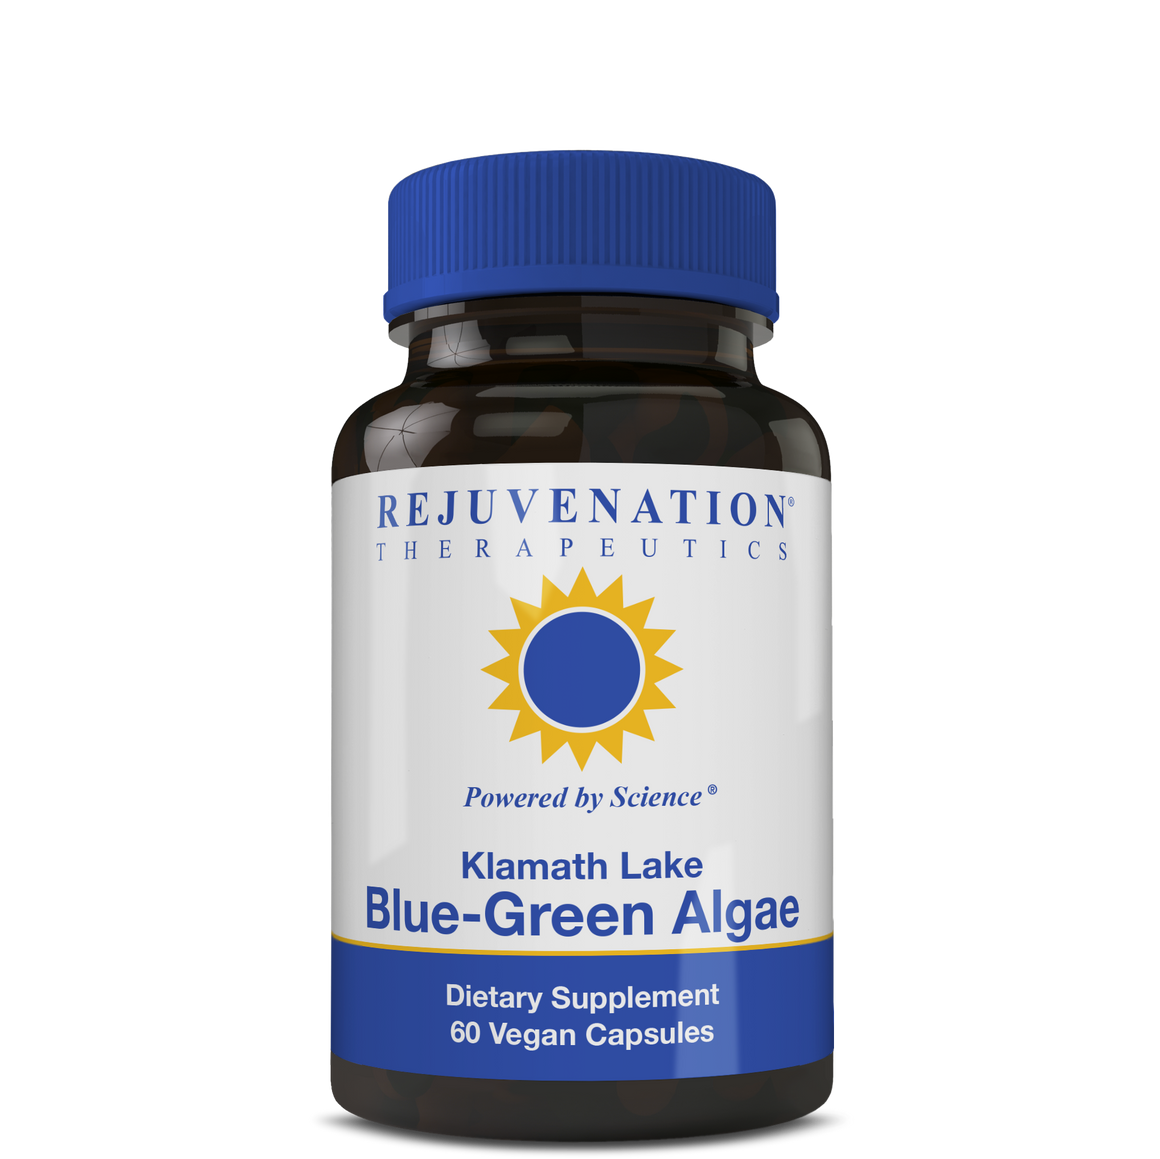 Klamath Lake Blue-Green Algae (500 mg, 60 Vegan Capsules) - Brain Health & Stress Management, Non-GMO, Gluten-Free